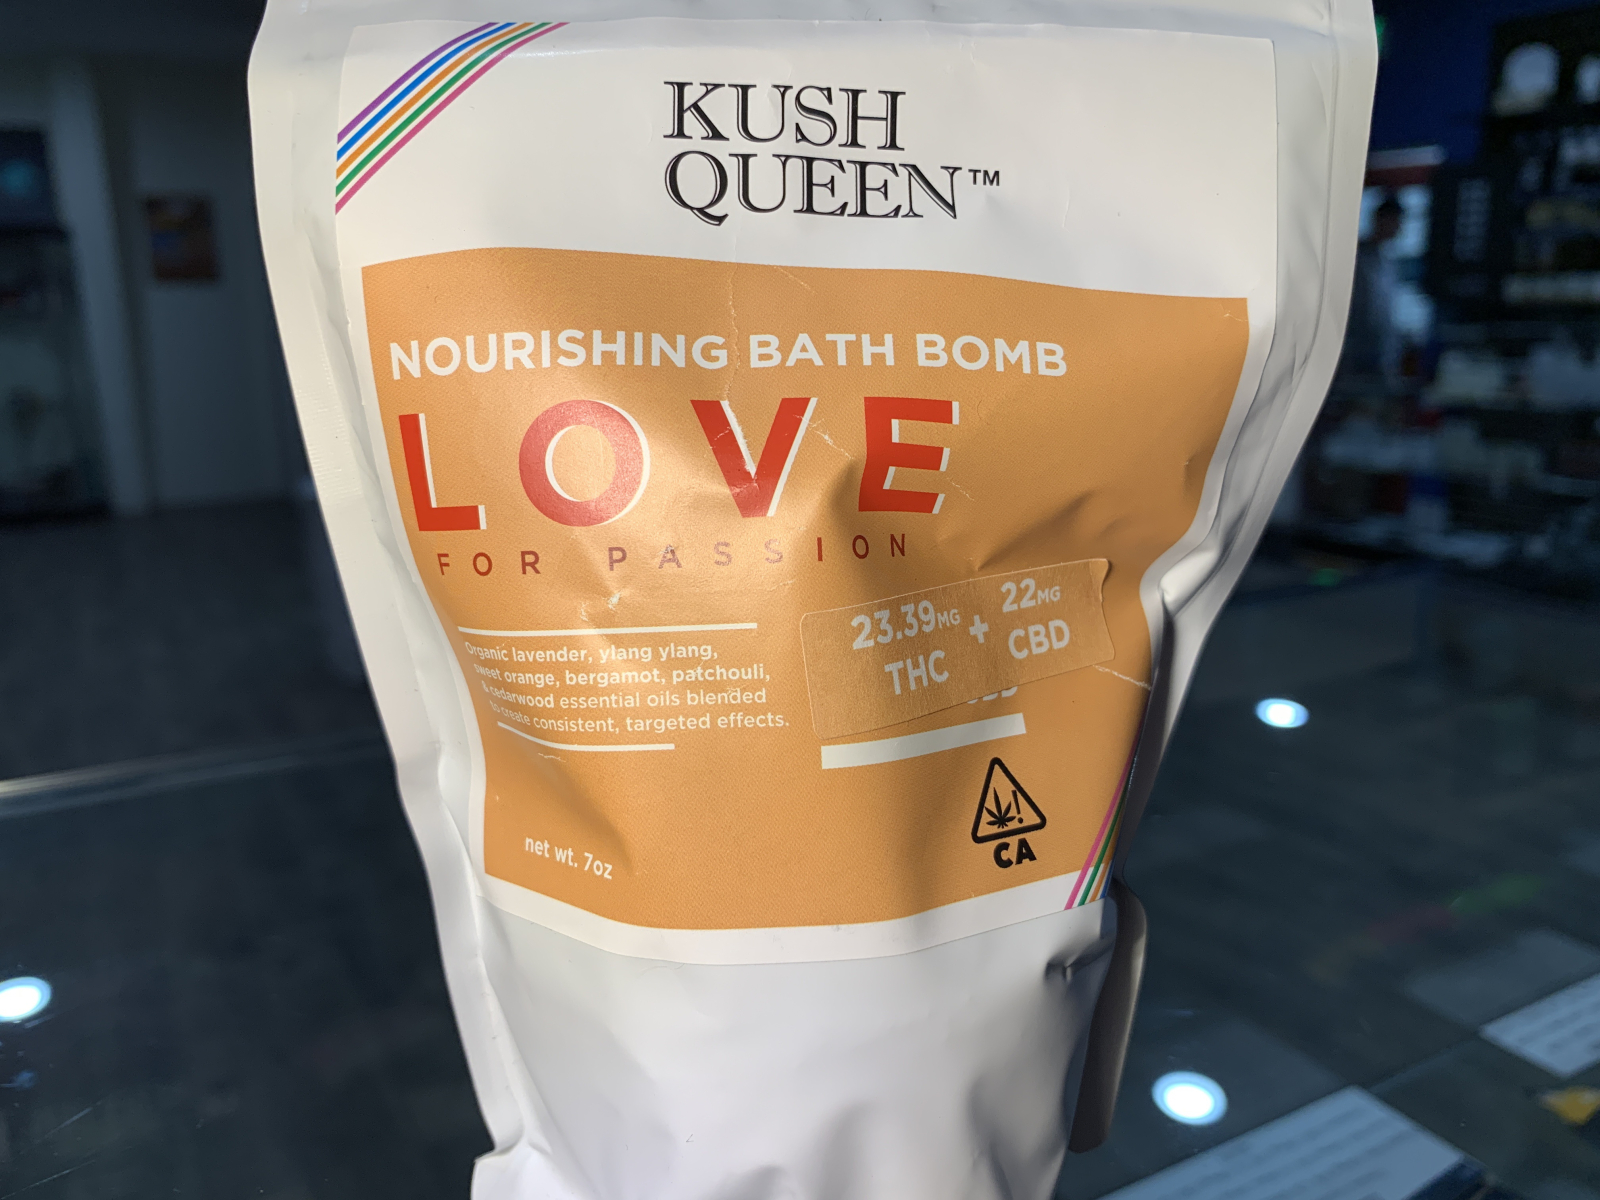 Queen Kush Love 1:1 bath bomb